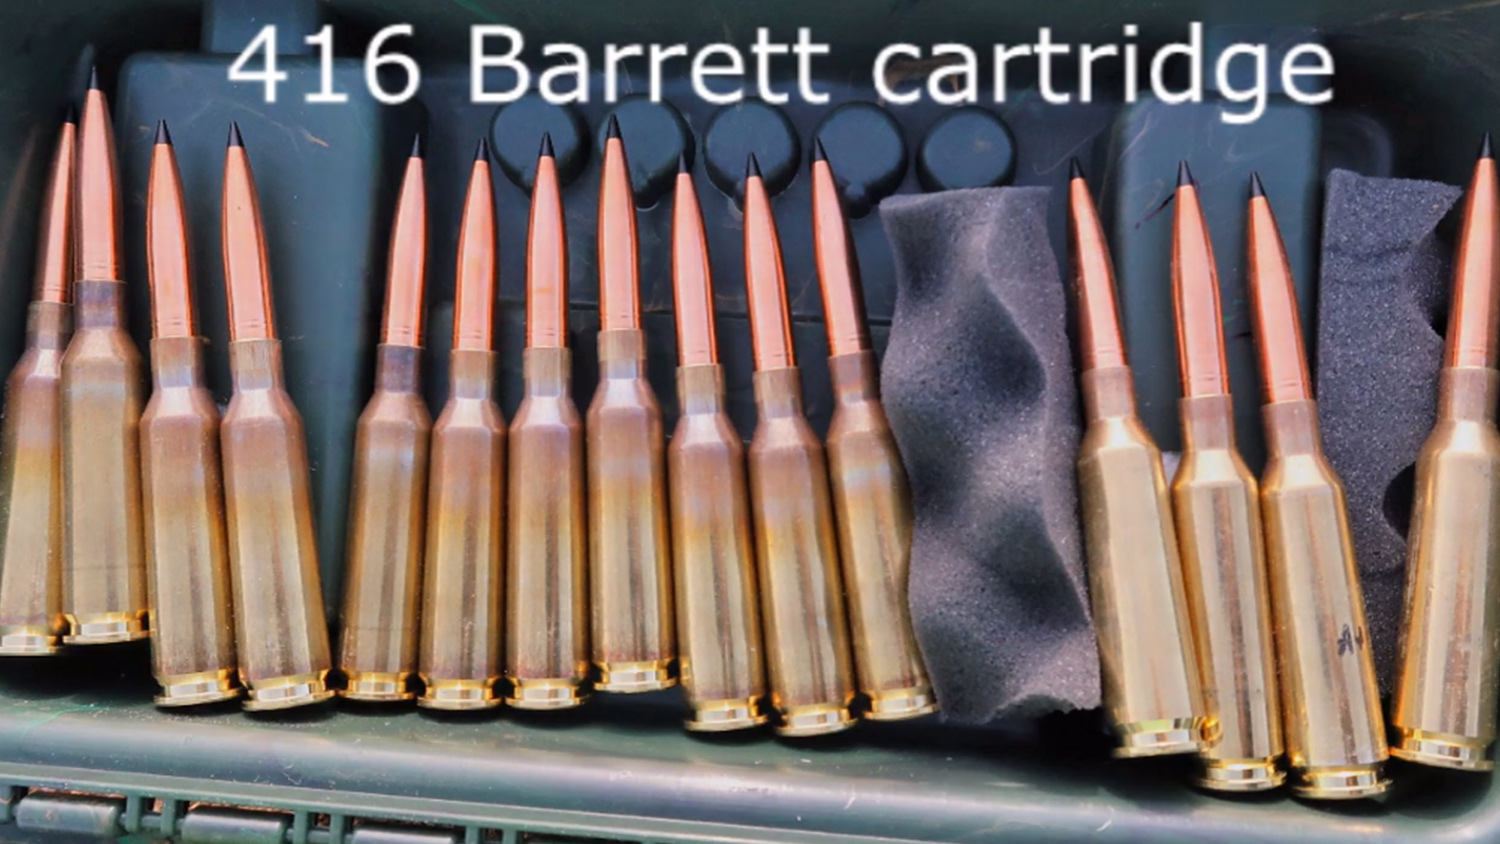 .416 Barrett cartridge | Paul Phillips 3.4-mile steel target hit